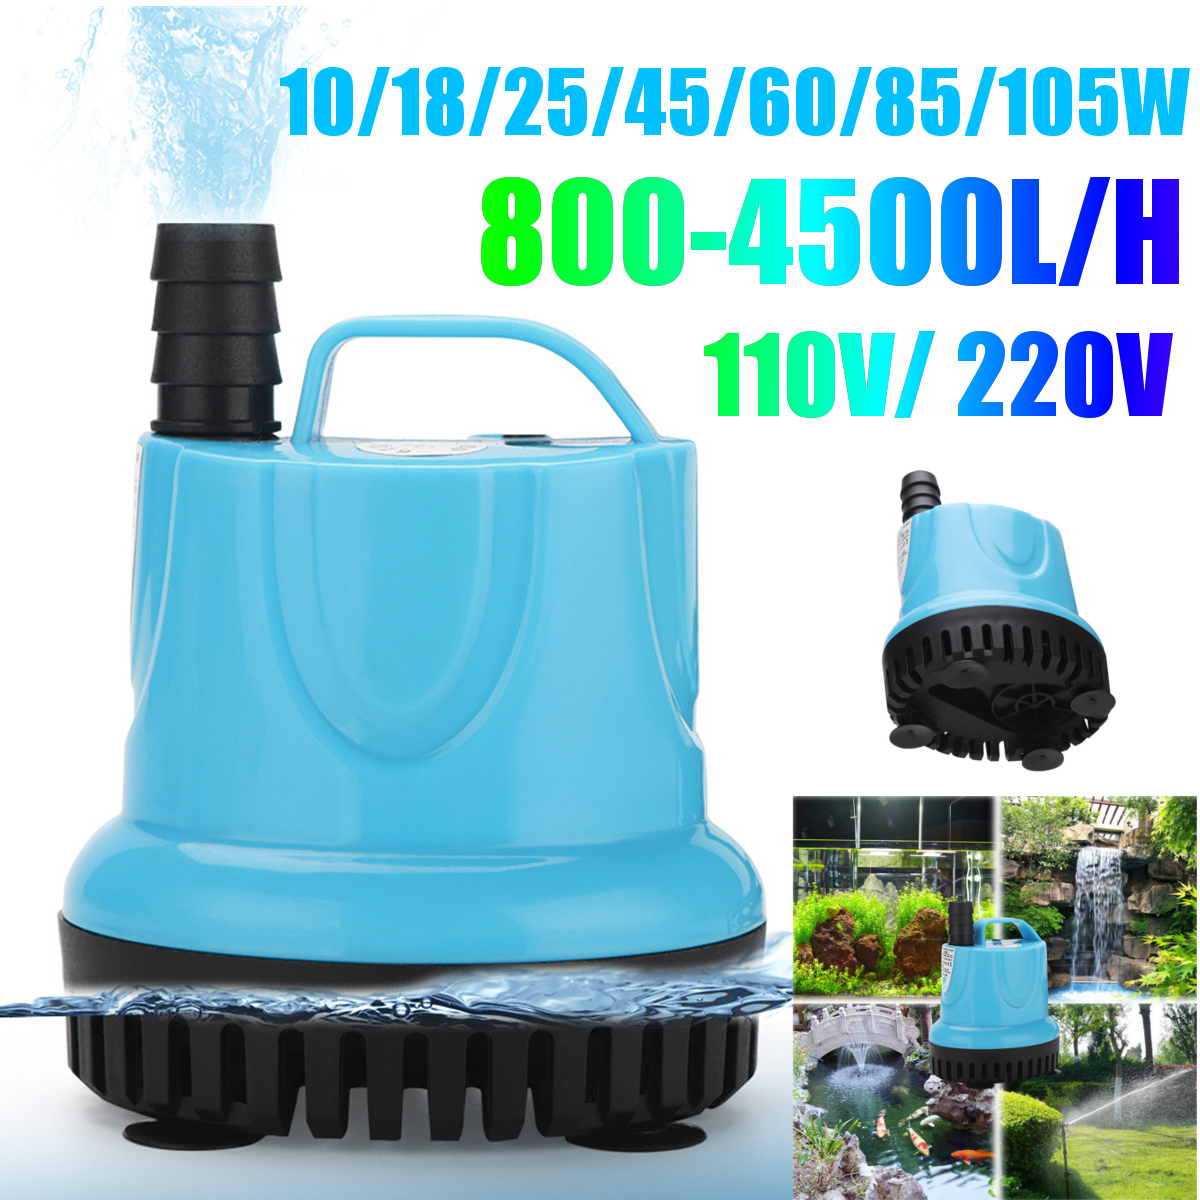 101825456085105W-Ultra-quiet-Submersible-Water-Fountain-Pump-Filter-Waterproof-Aquarium-Tank-Fountai-1709940-2